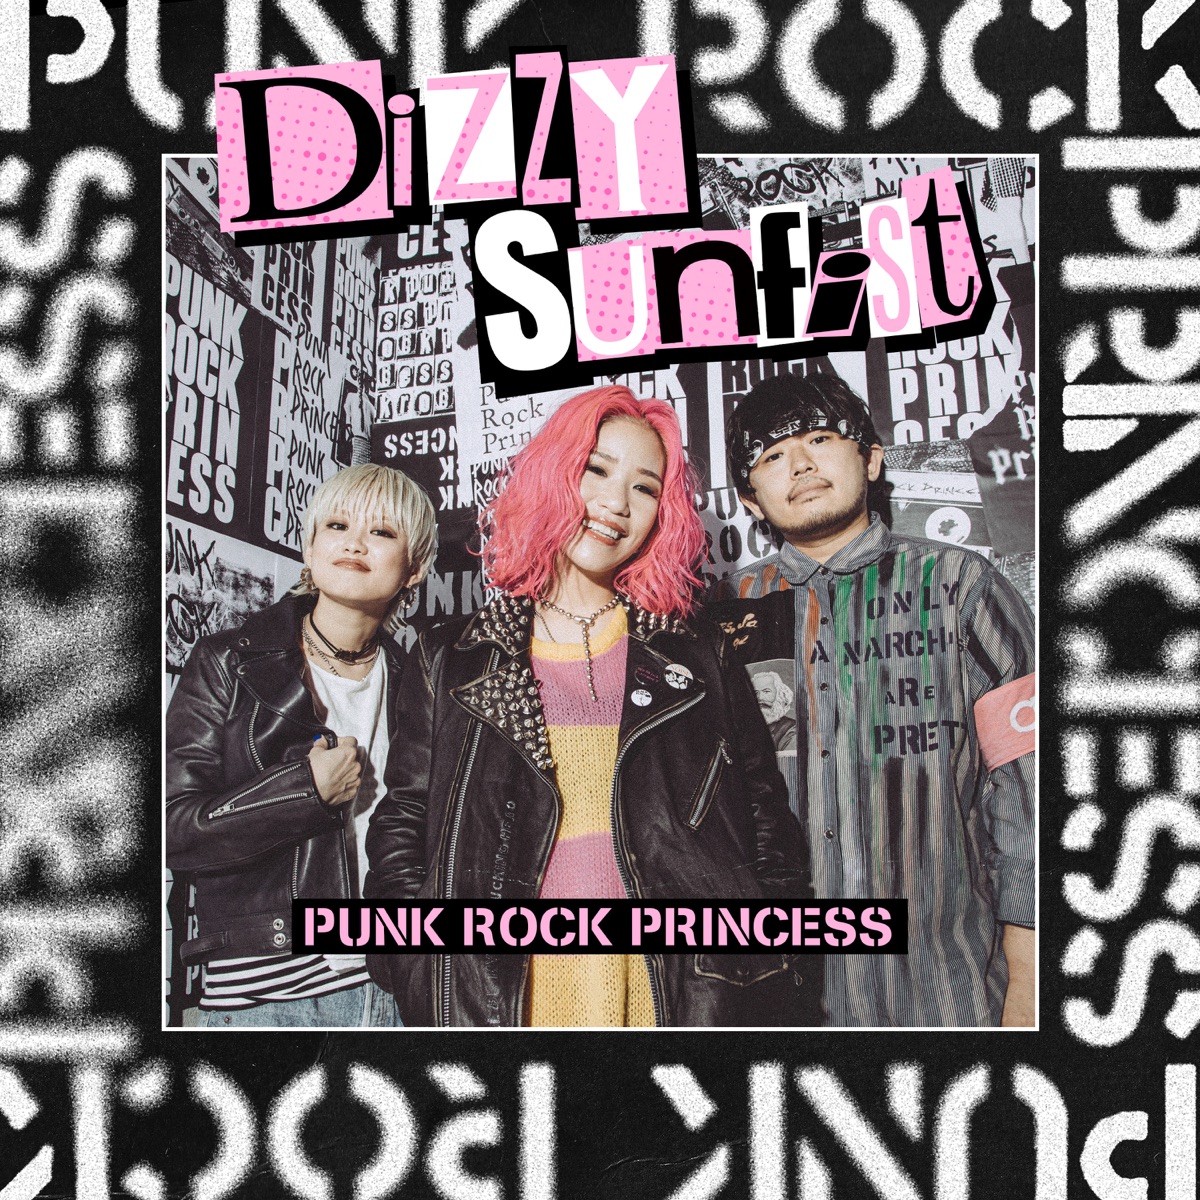 『Dizzy Sunfist - Decided』収録の『PUNK ROCK PRINCESS』ジャケット